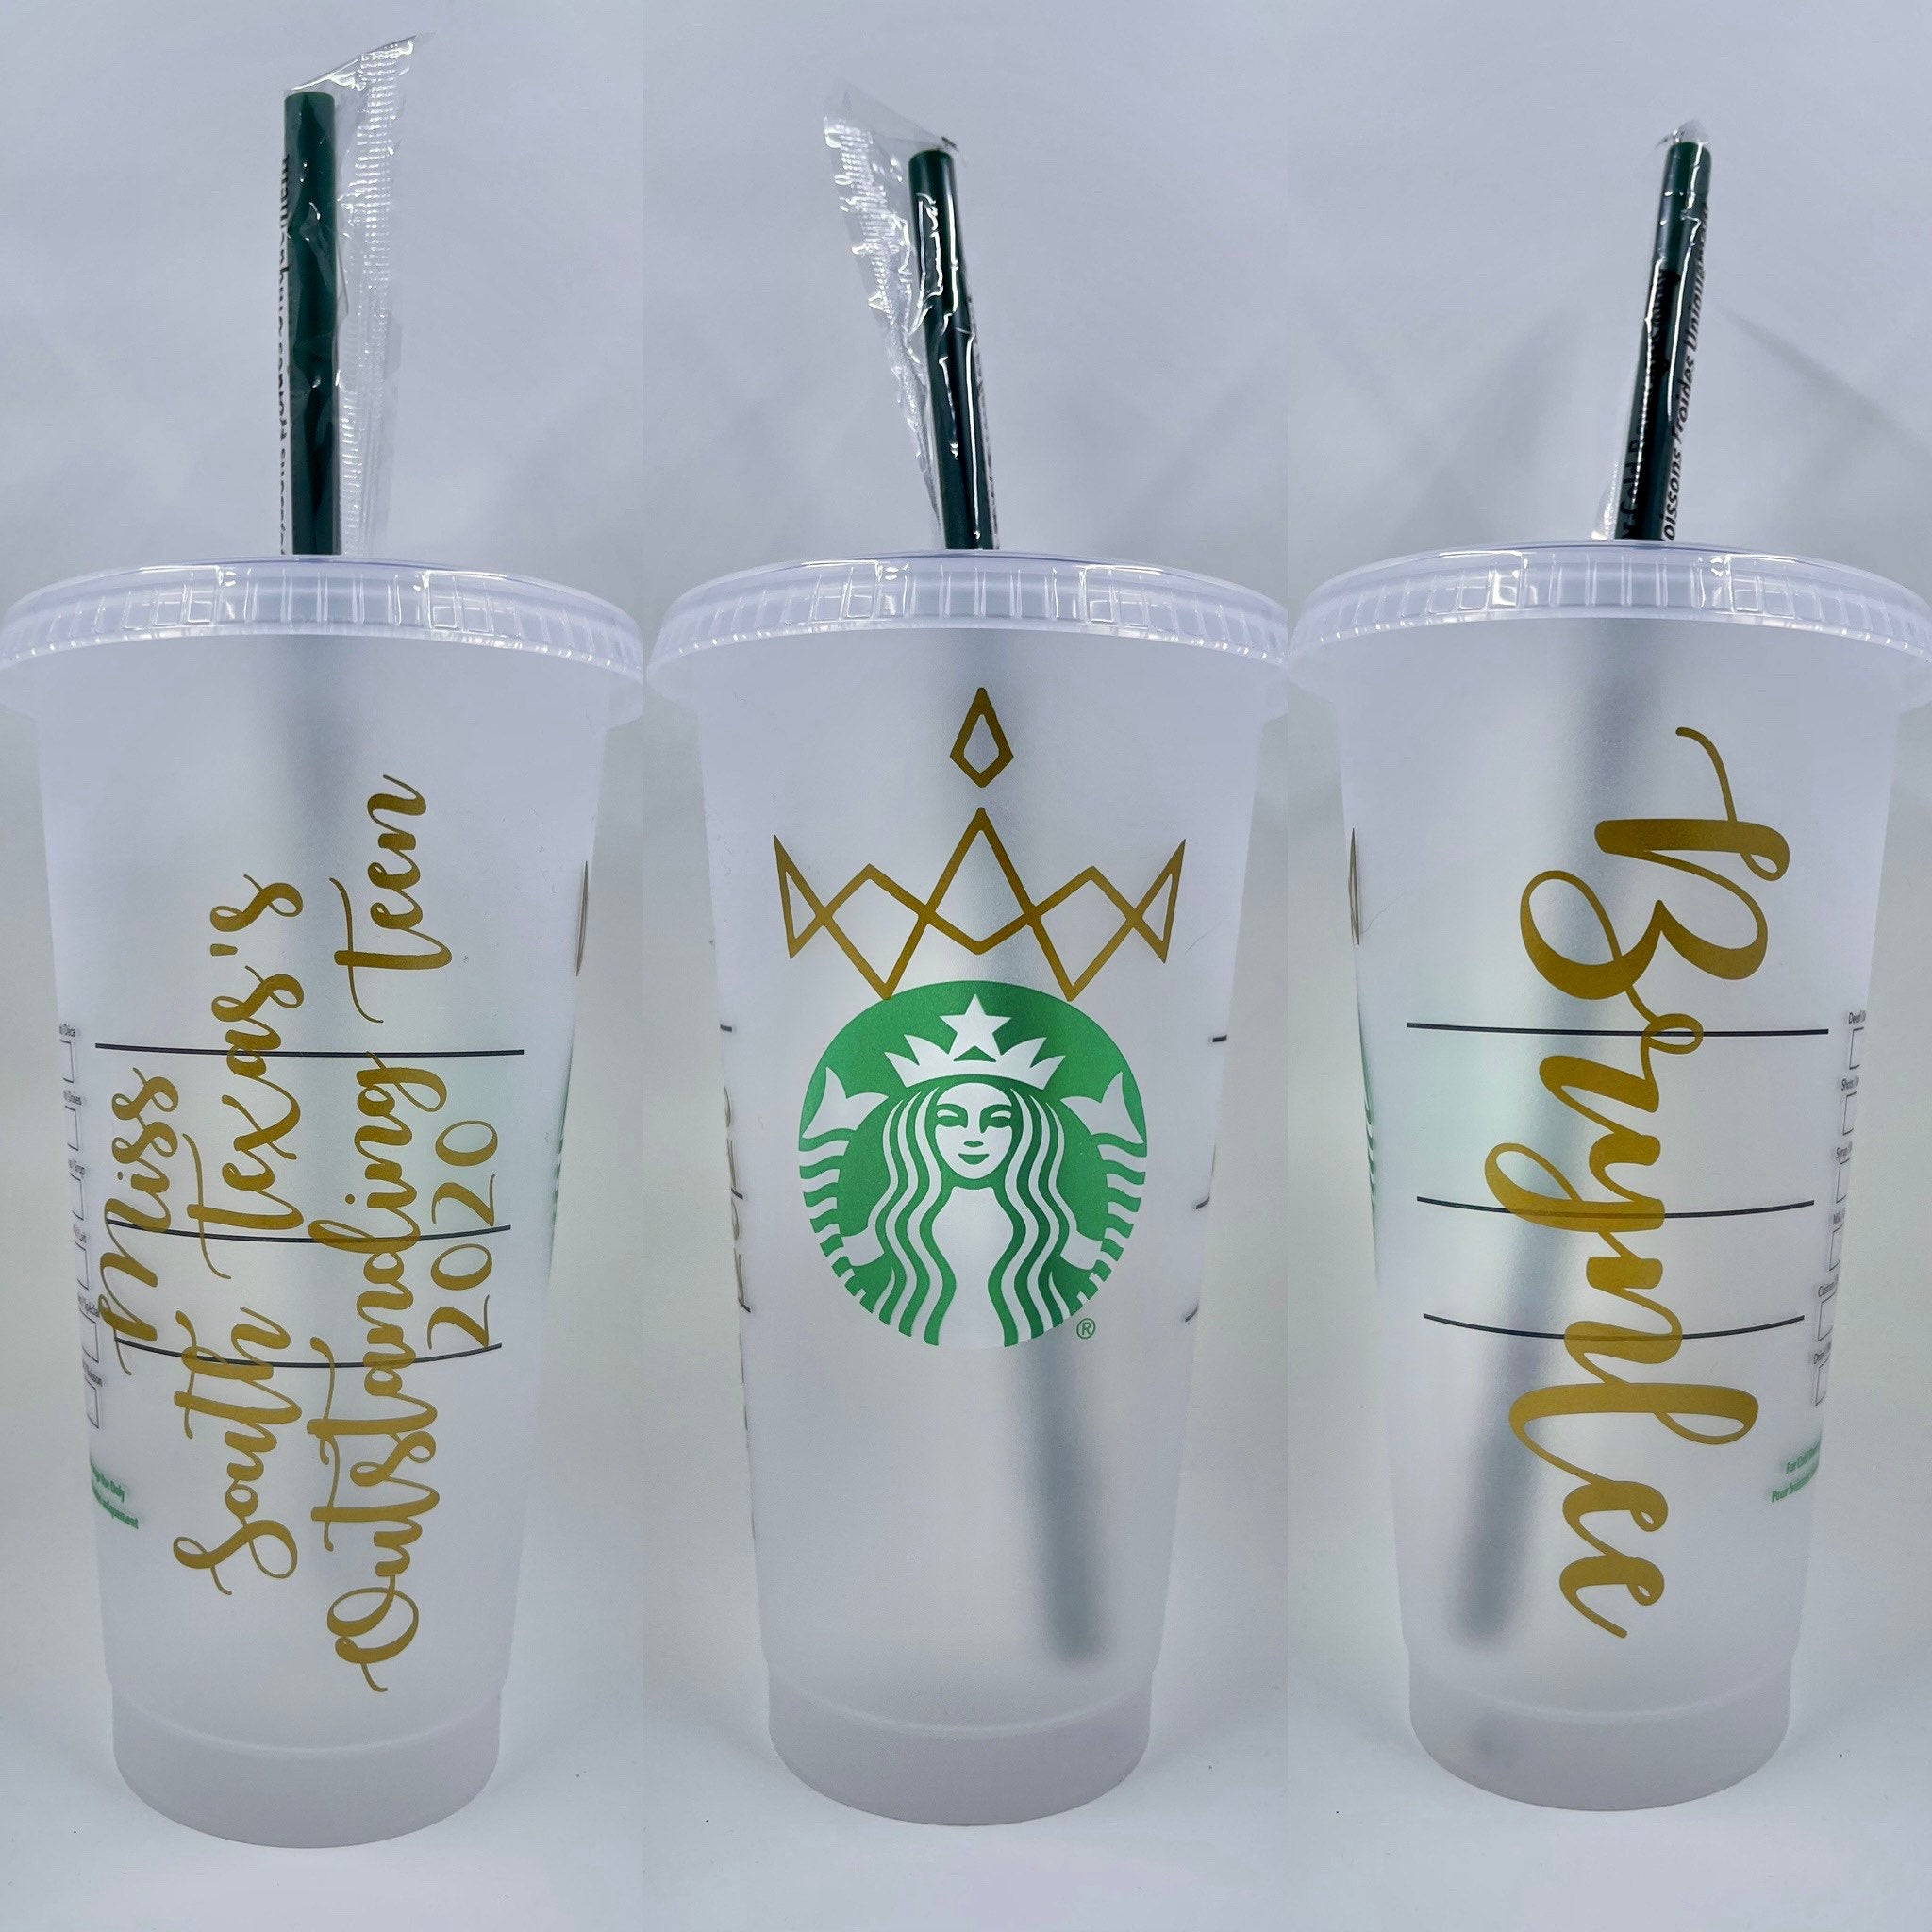 Miss America’s Outstanding Teen Starbucks Cup